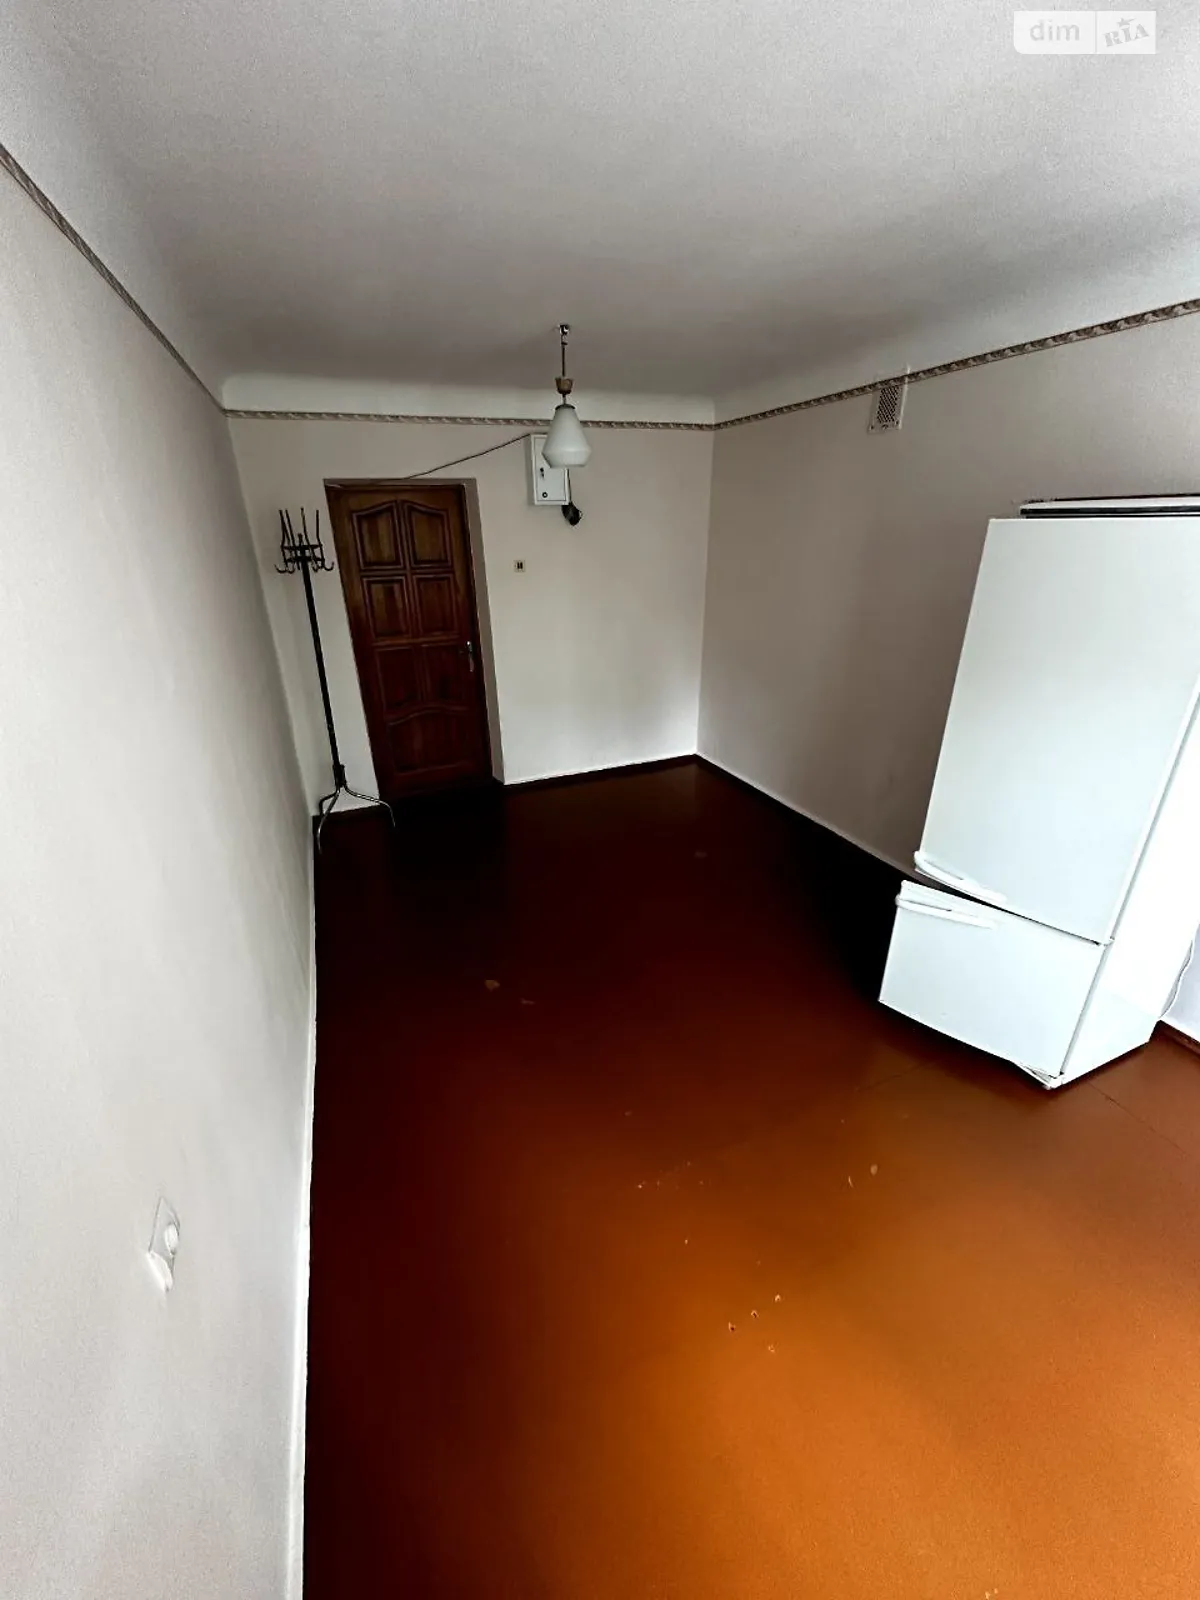 Продается комната 25 кв. м в Ровно - фото 3